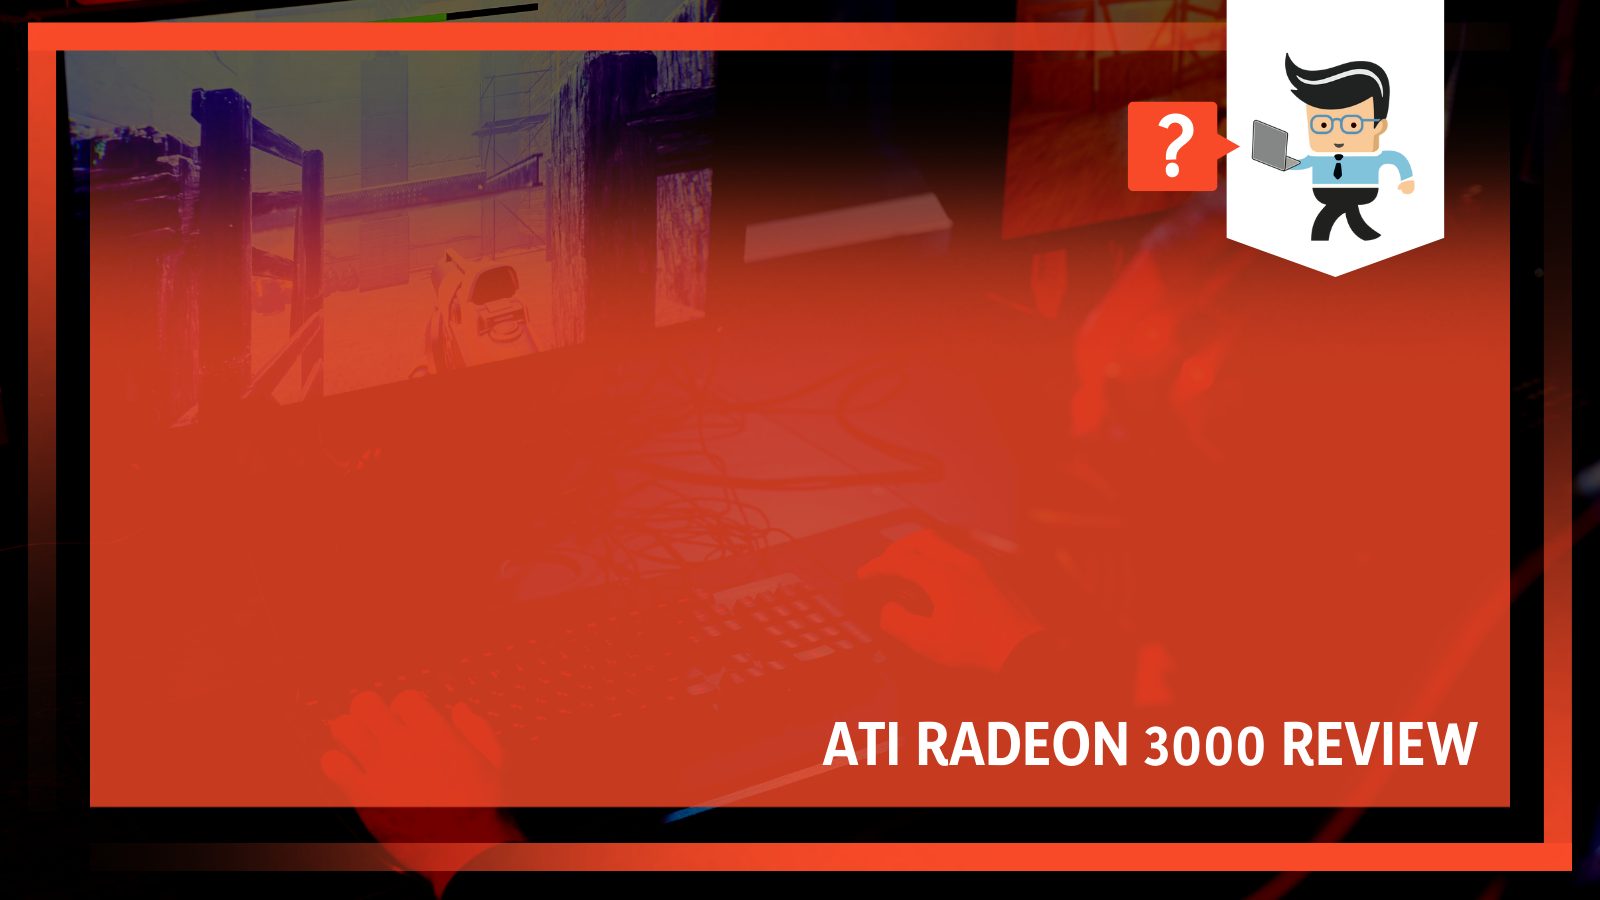 Ati radeon review good for hardcore gaming x